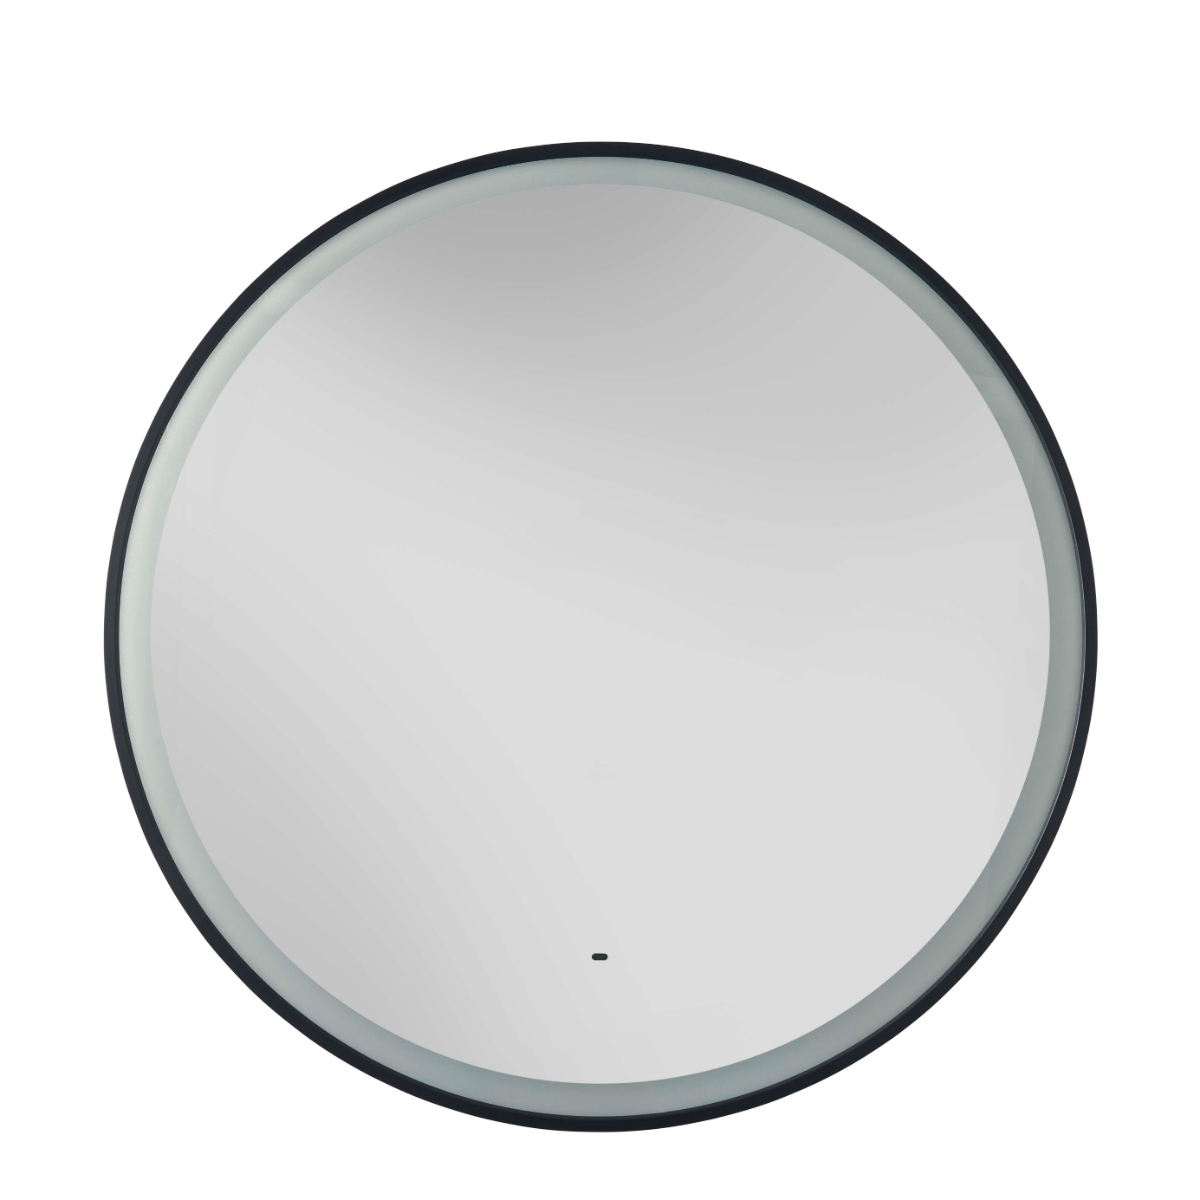 Newick Illuminated Circular Mirror 590mm Black